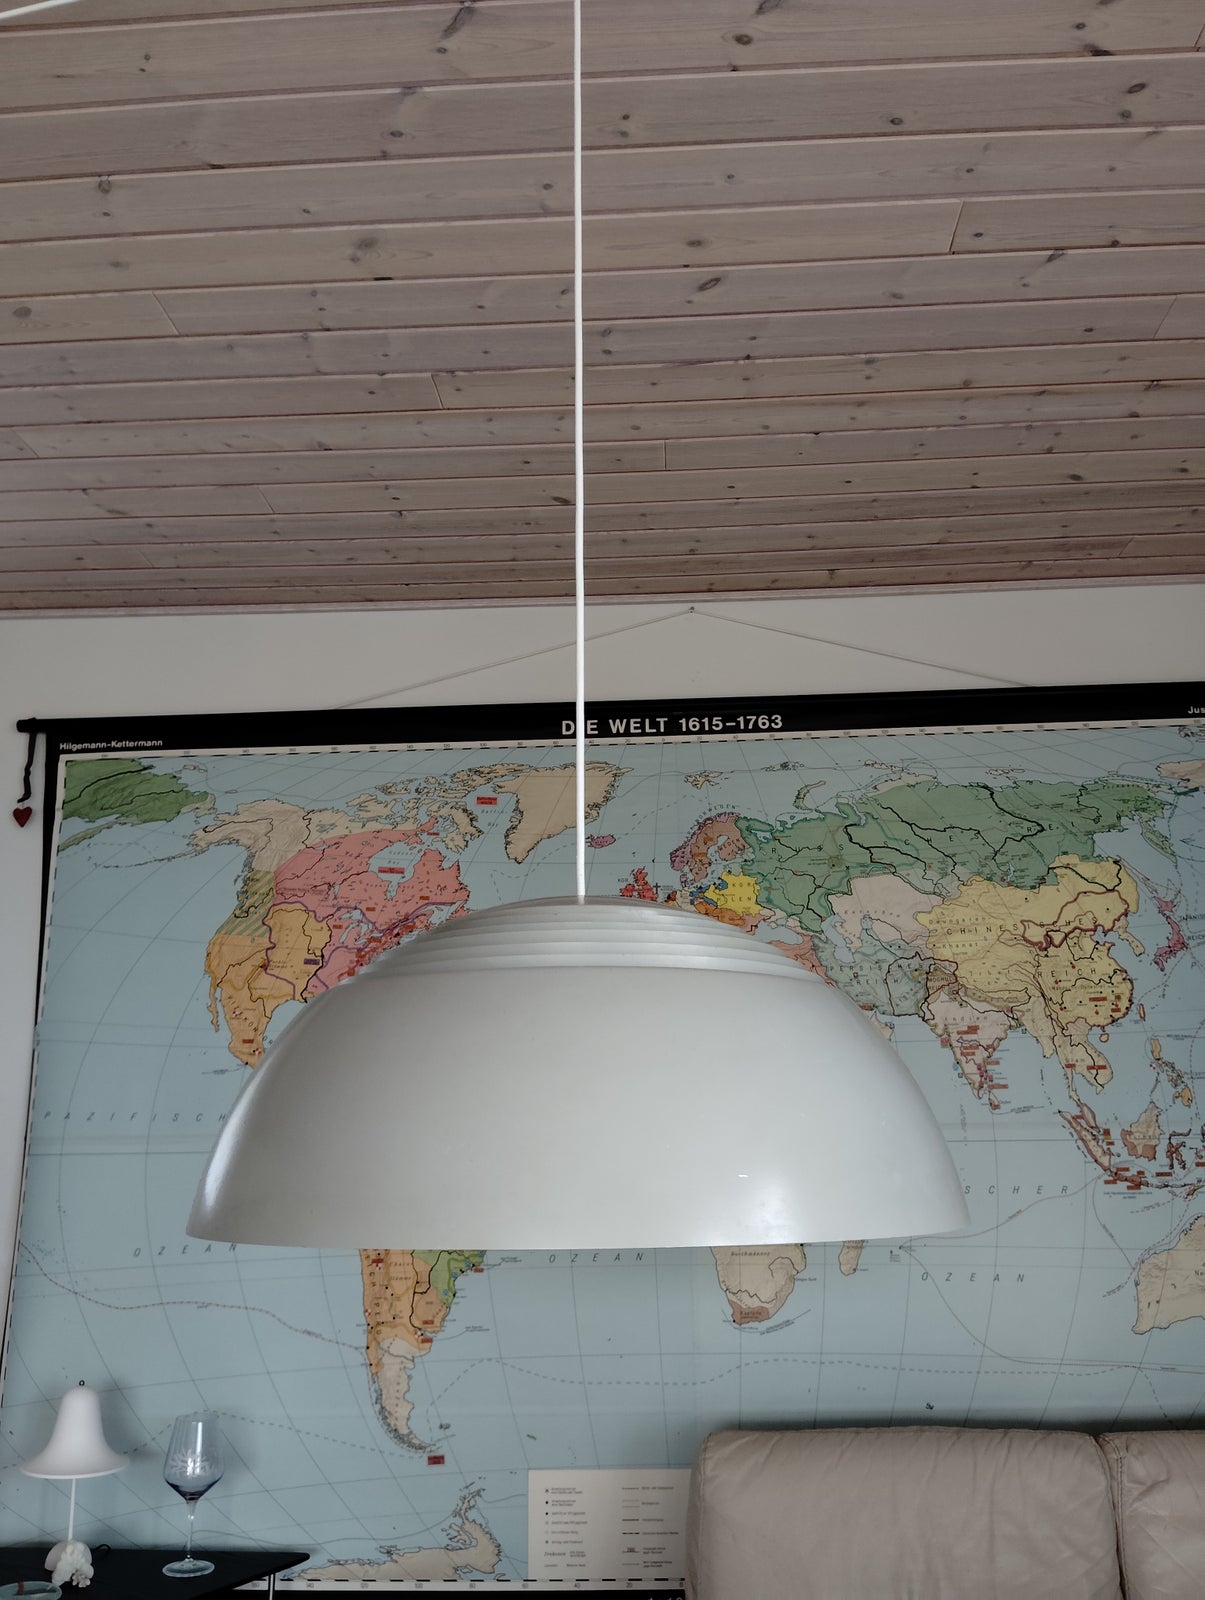 Arne Jacobsen, AJ500, Lampe